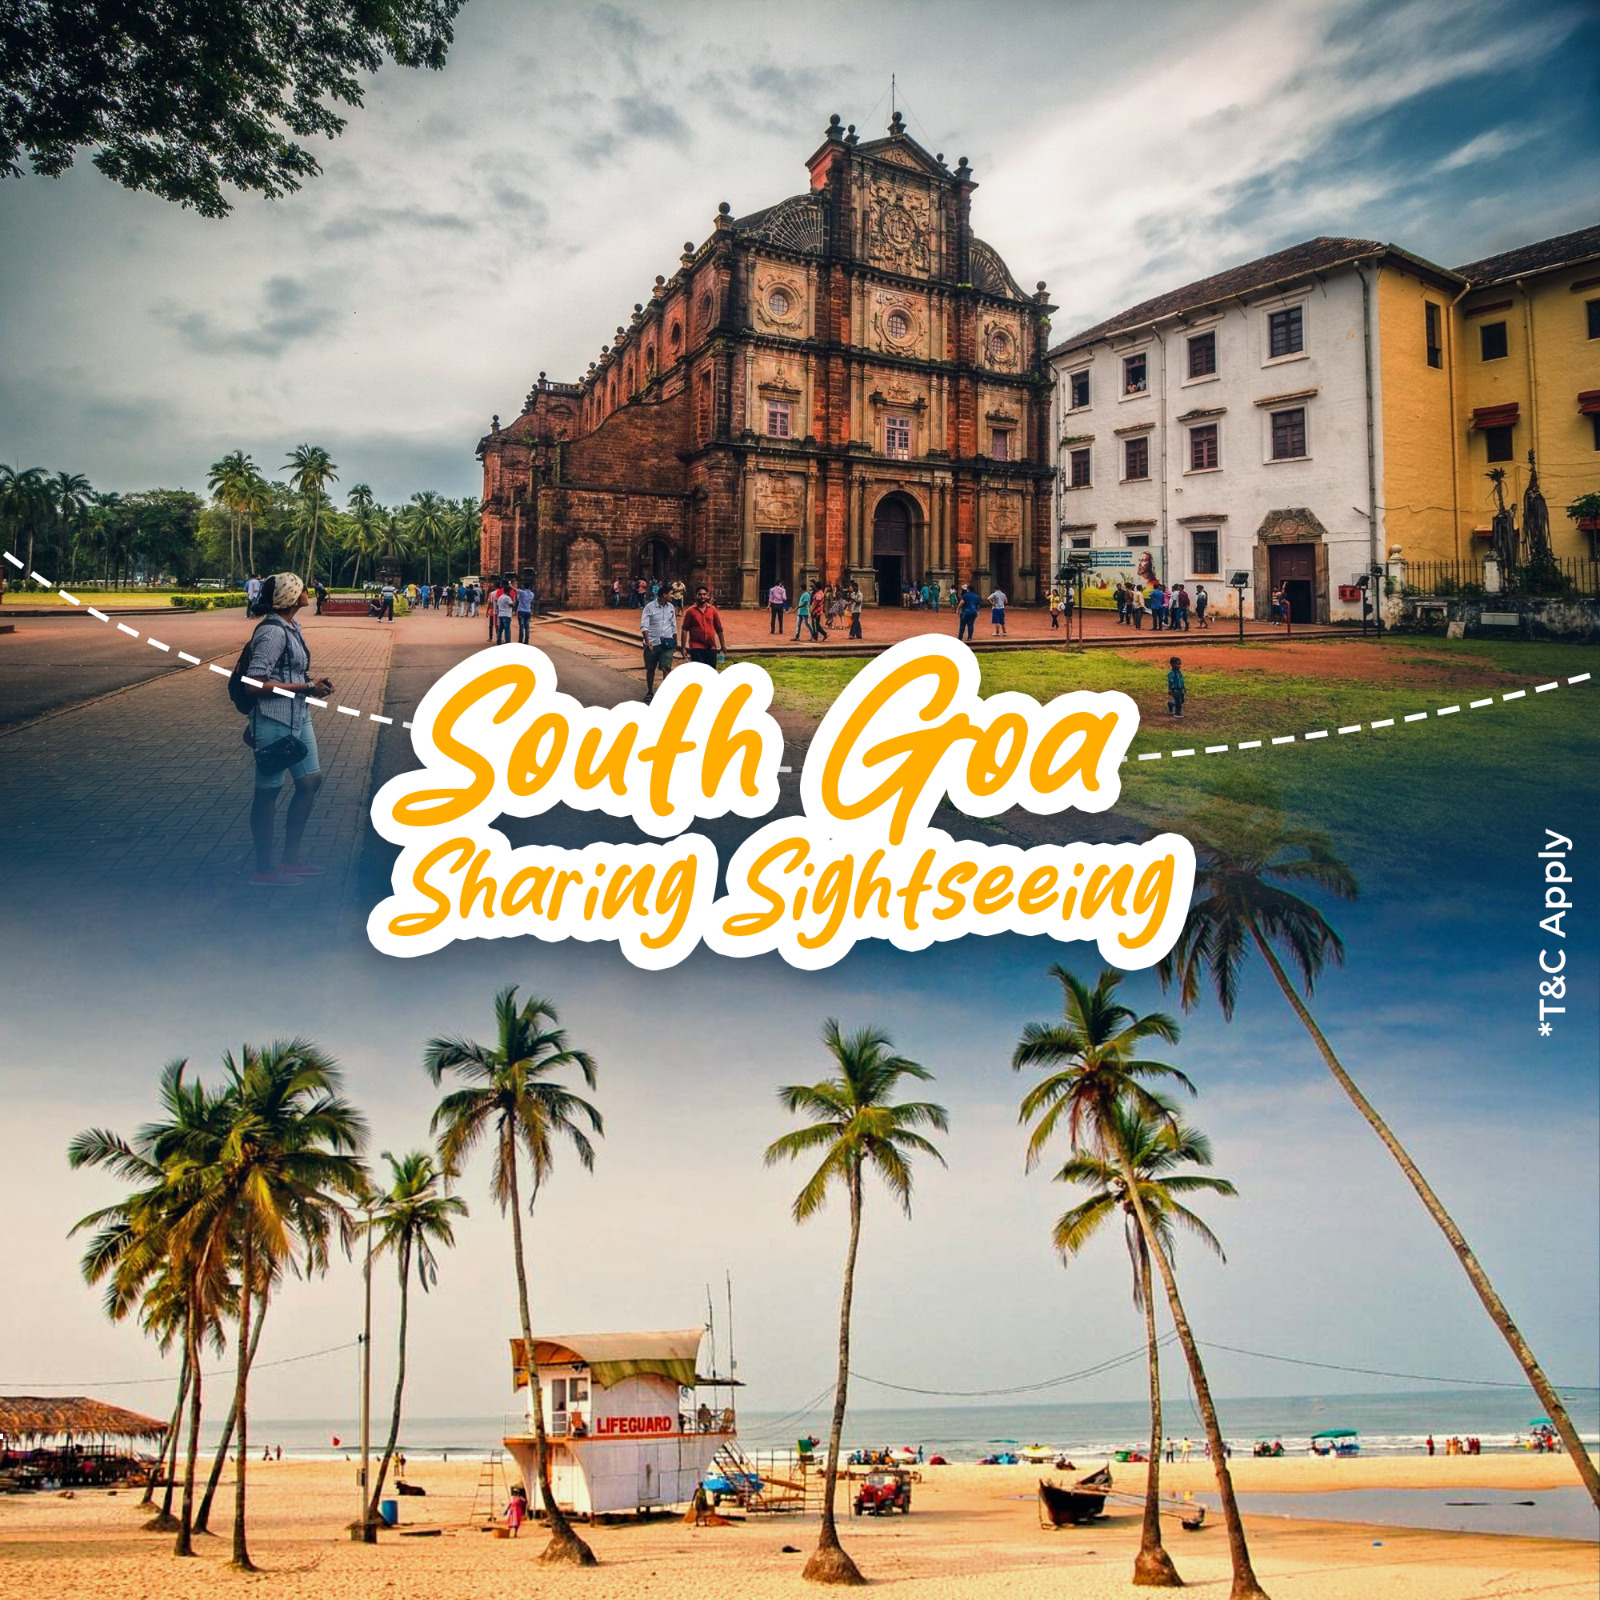 South Goa Sightseeing ( SIC )